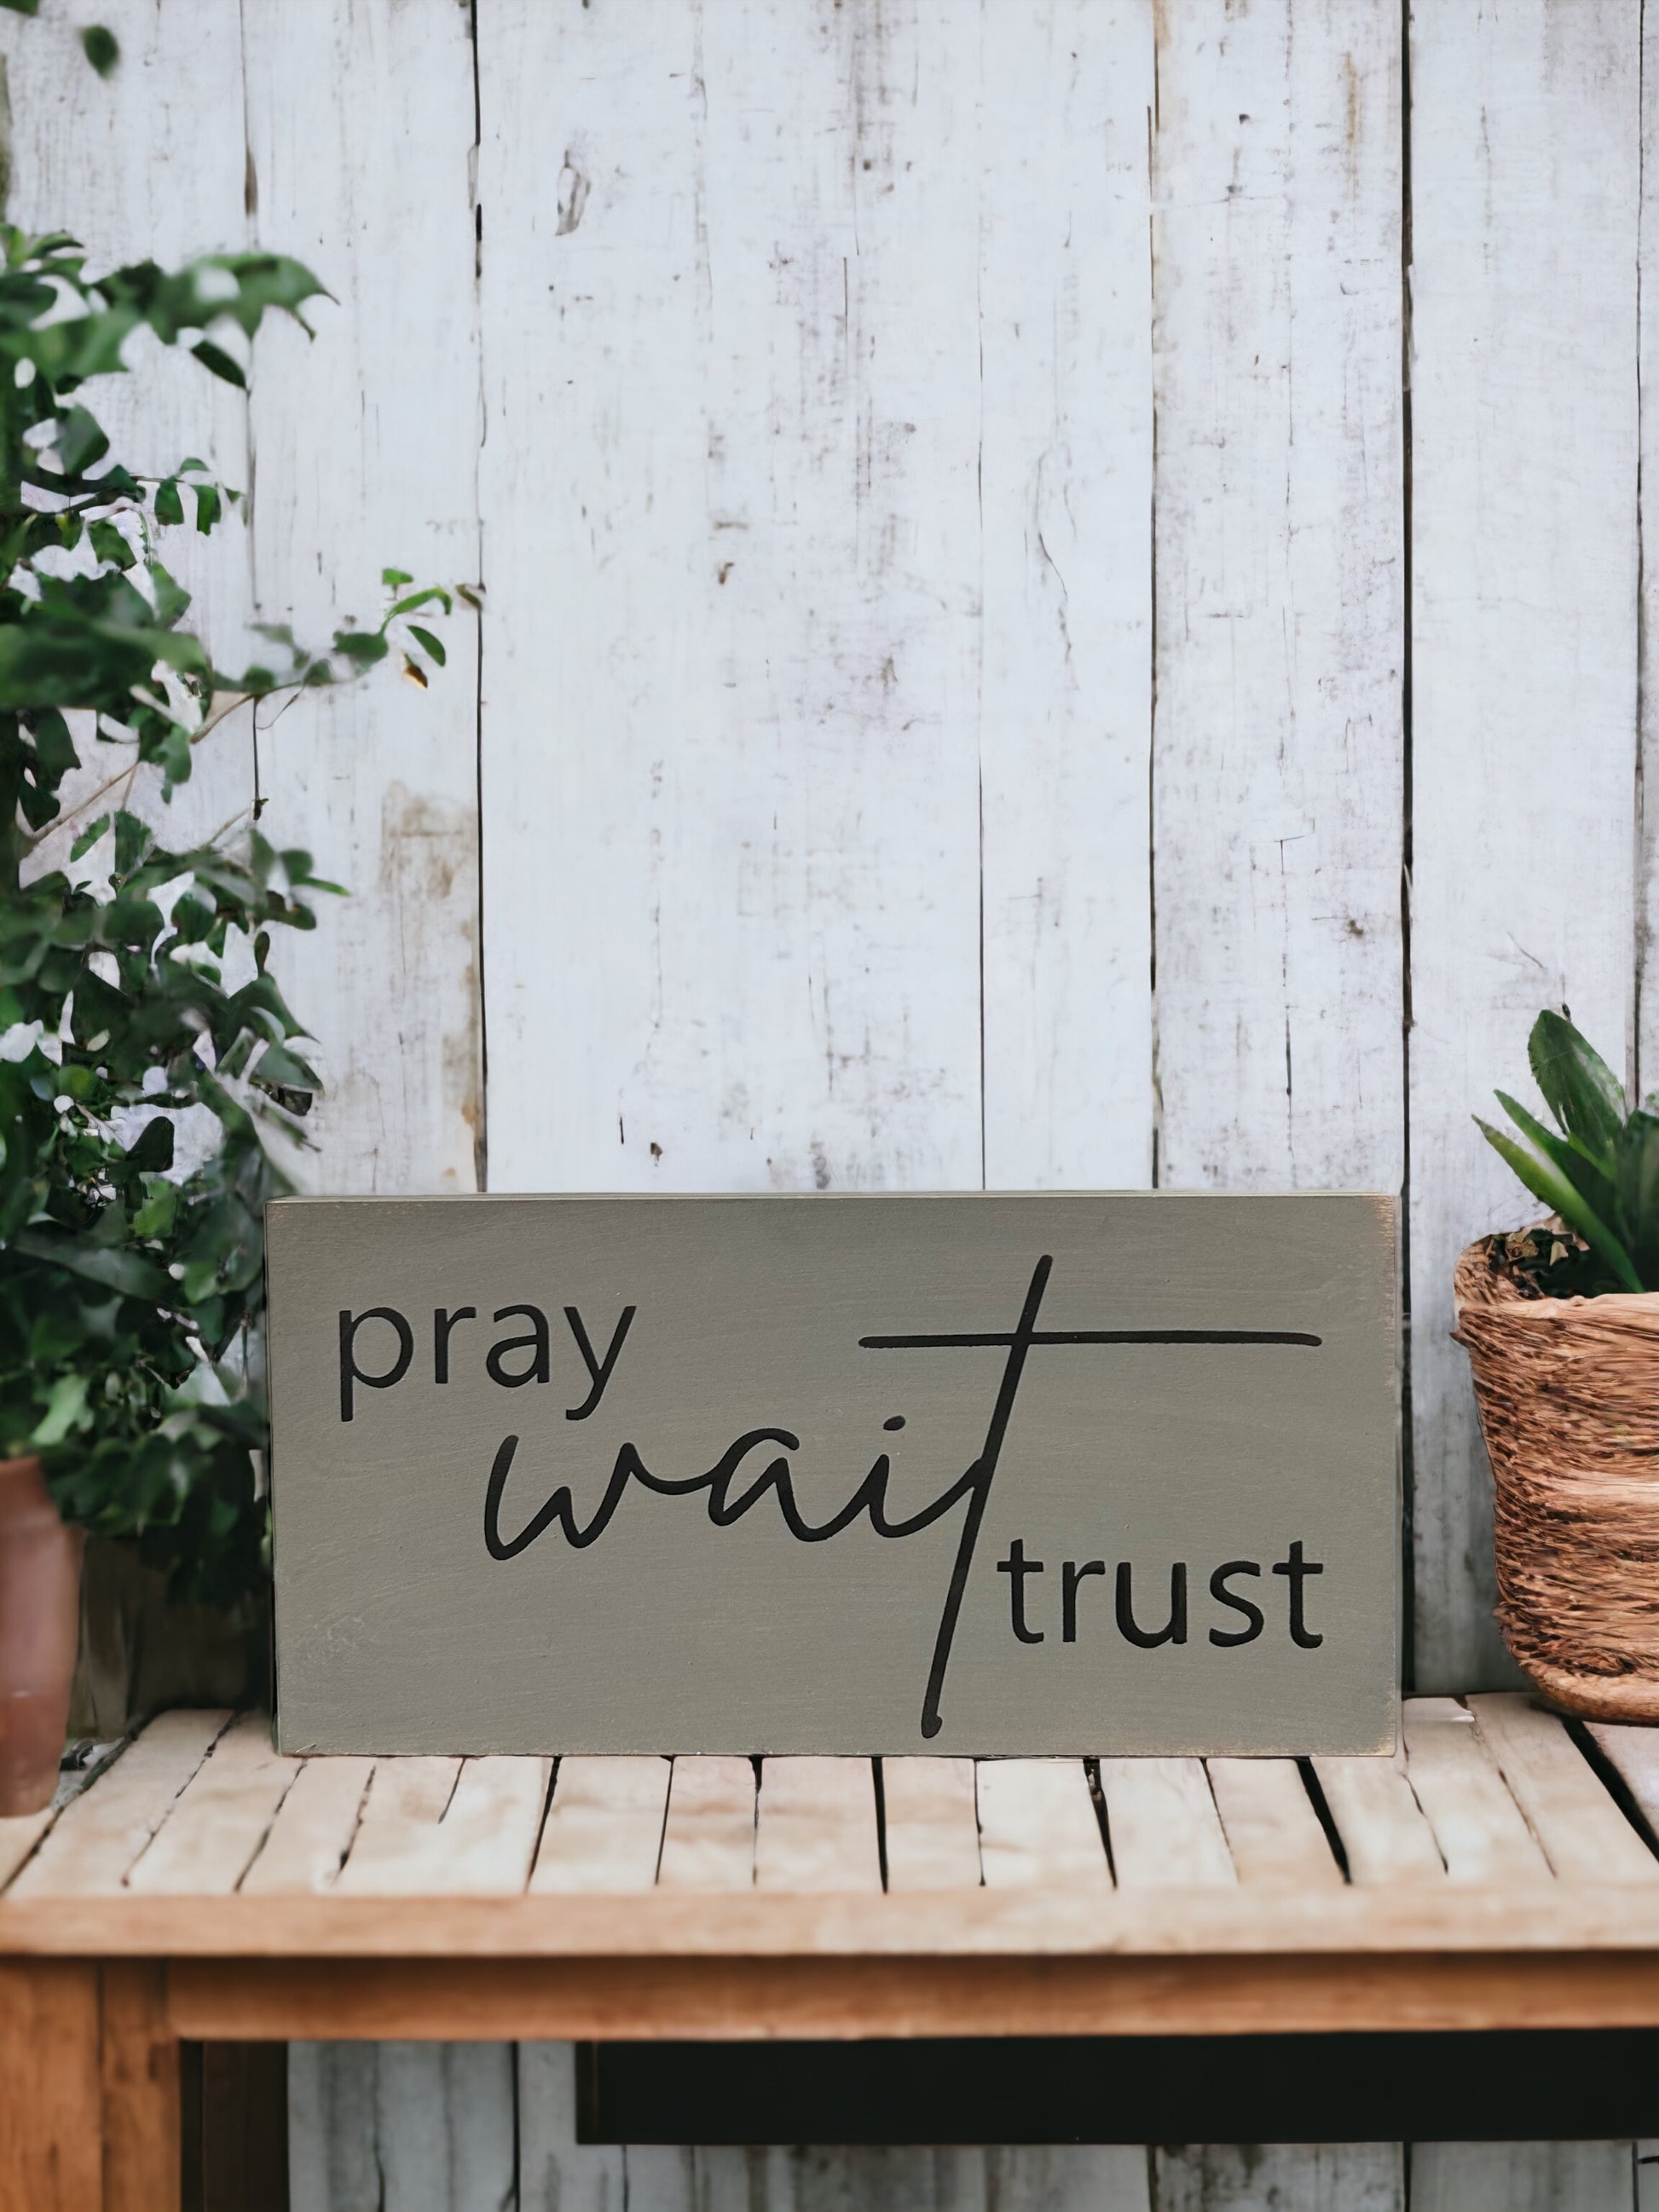 "Pray wait trust" wood sign